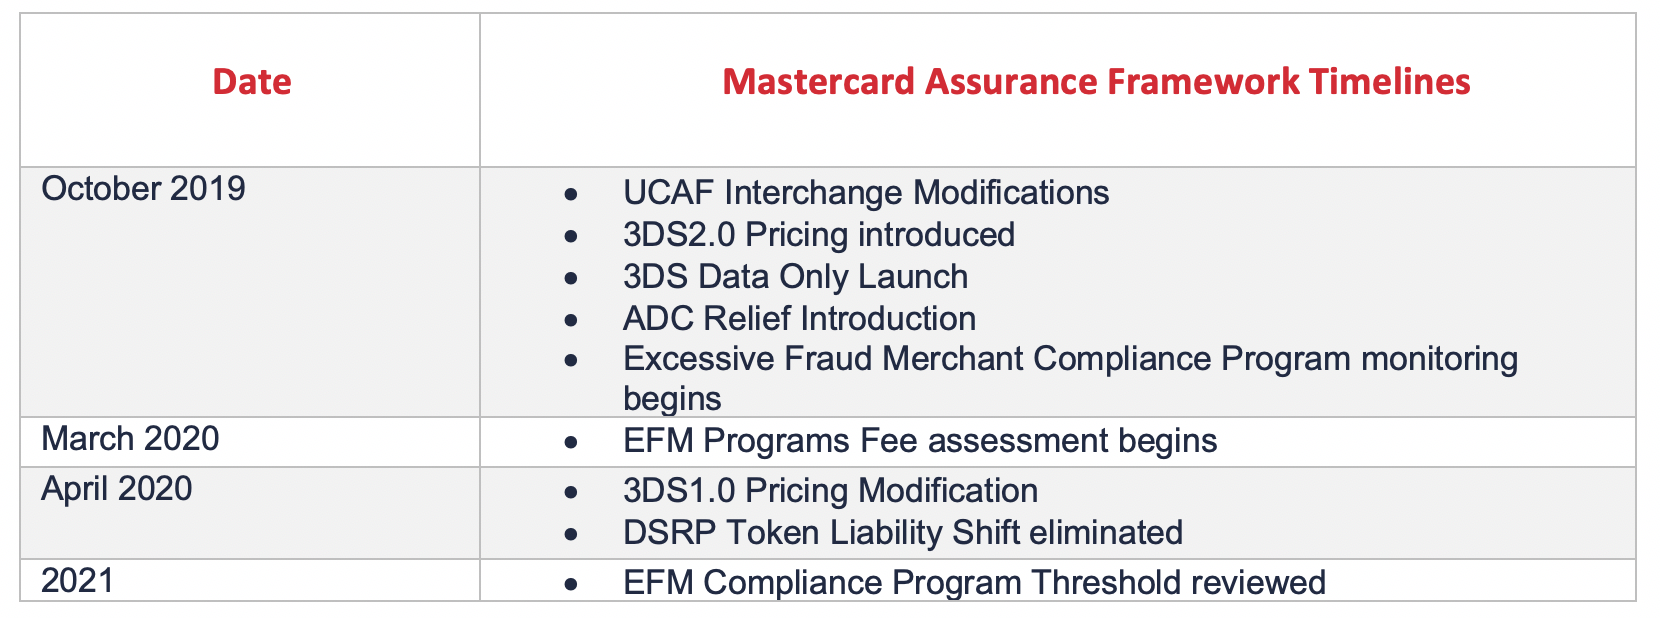 table showing matercard's assurance framework timelines